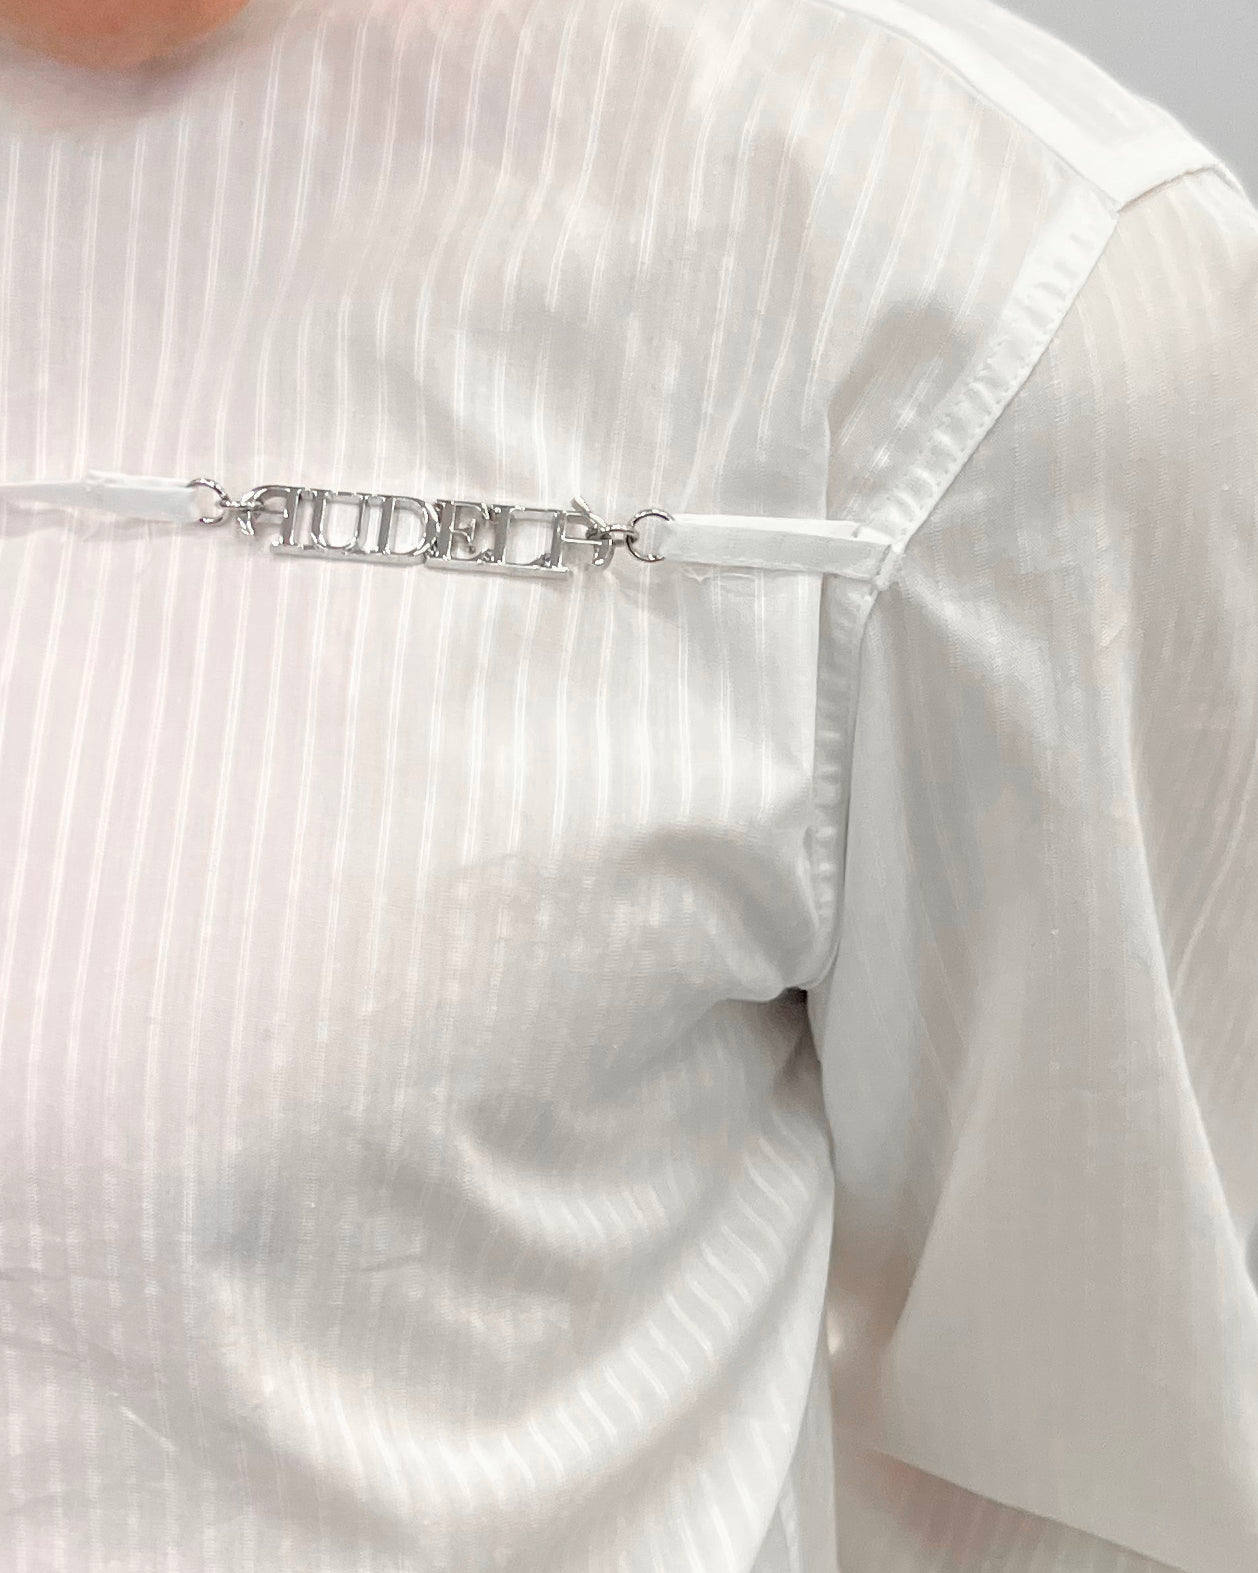 Long sleeve shirt with audelà logo shoulder height